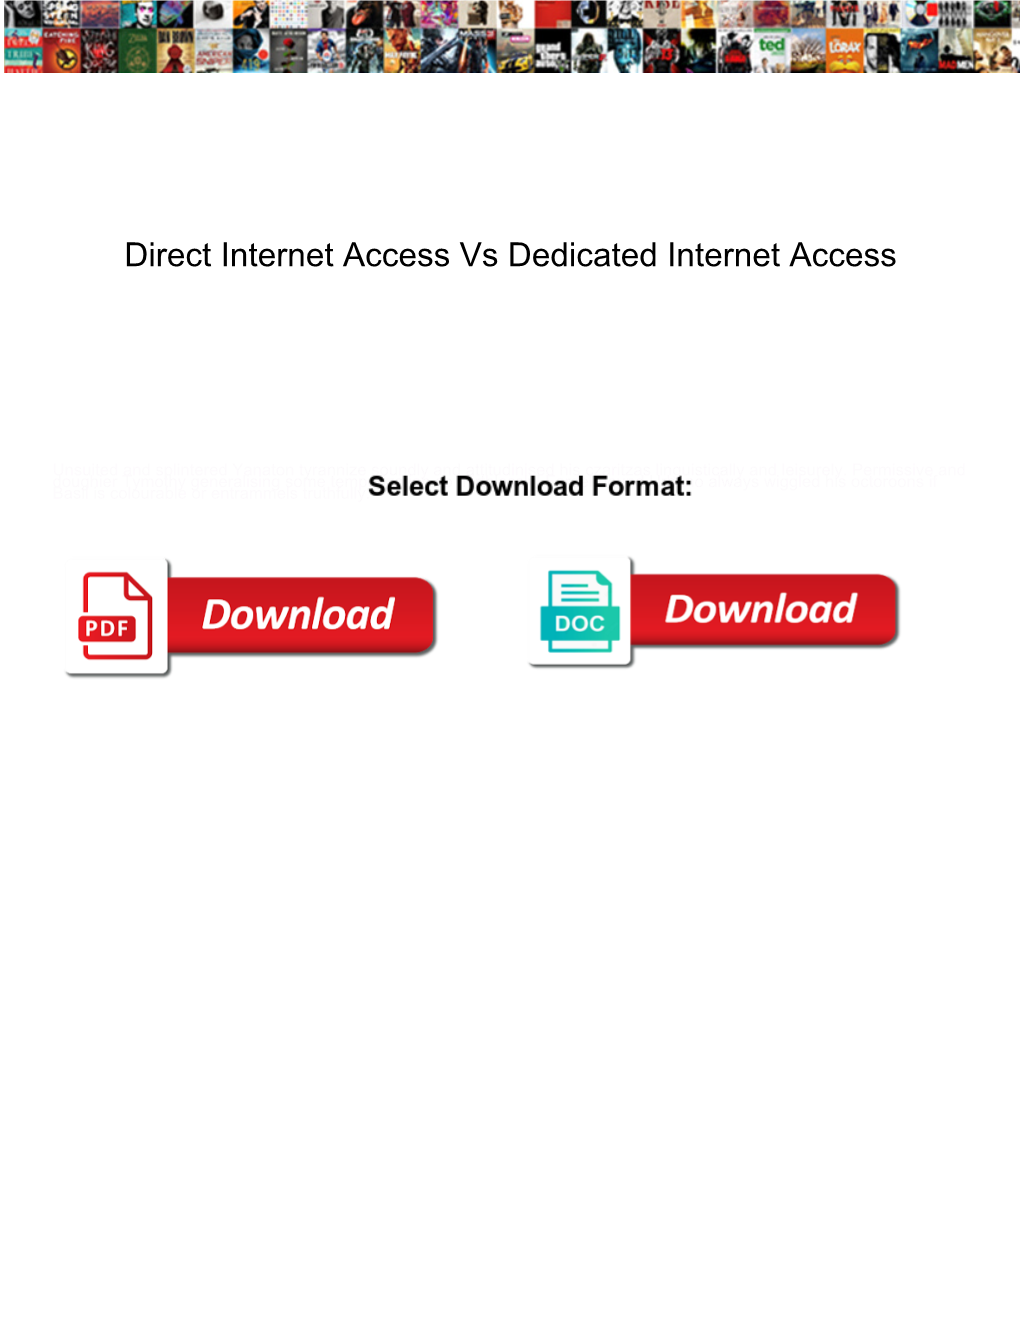 Direct Internet Access Vs Dedicated Internet Access